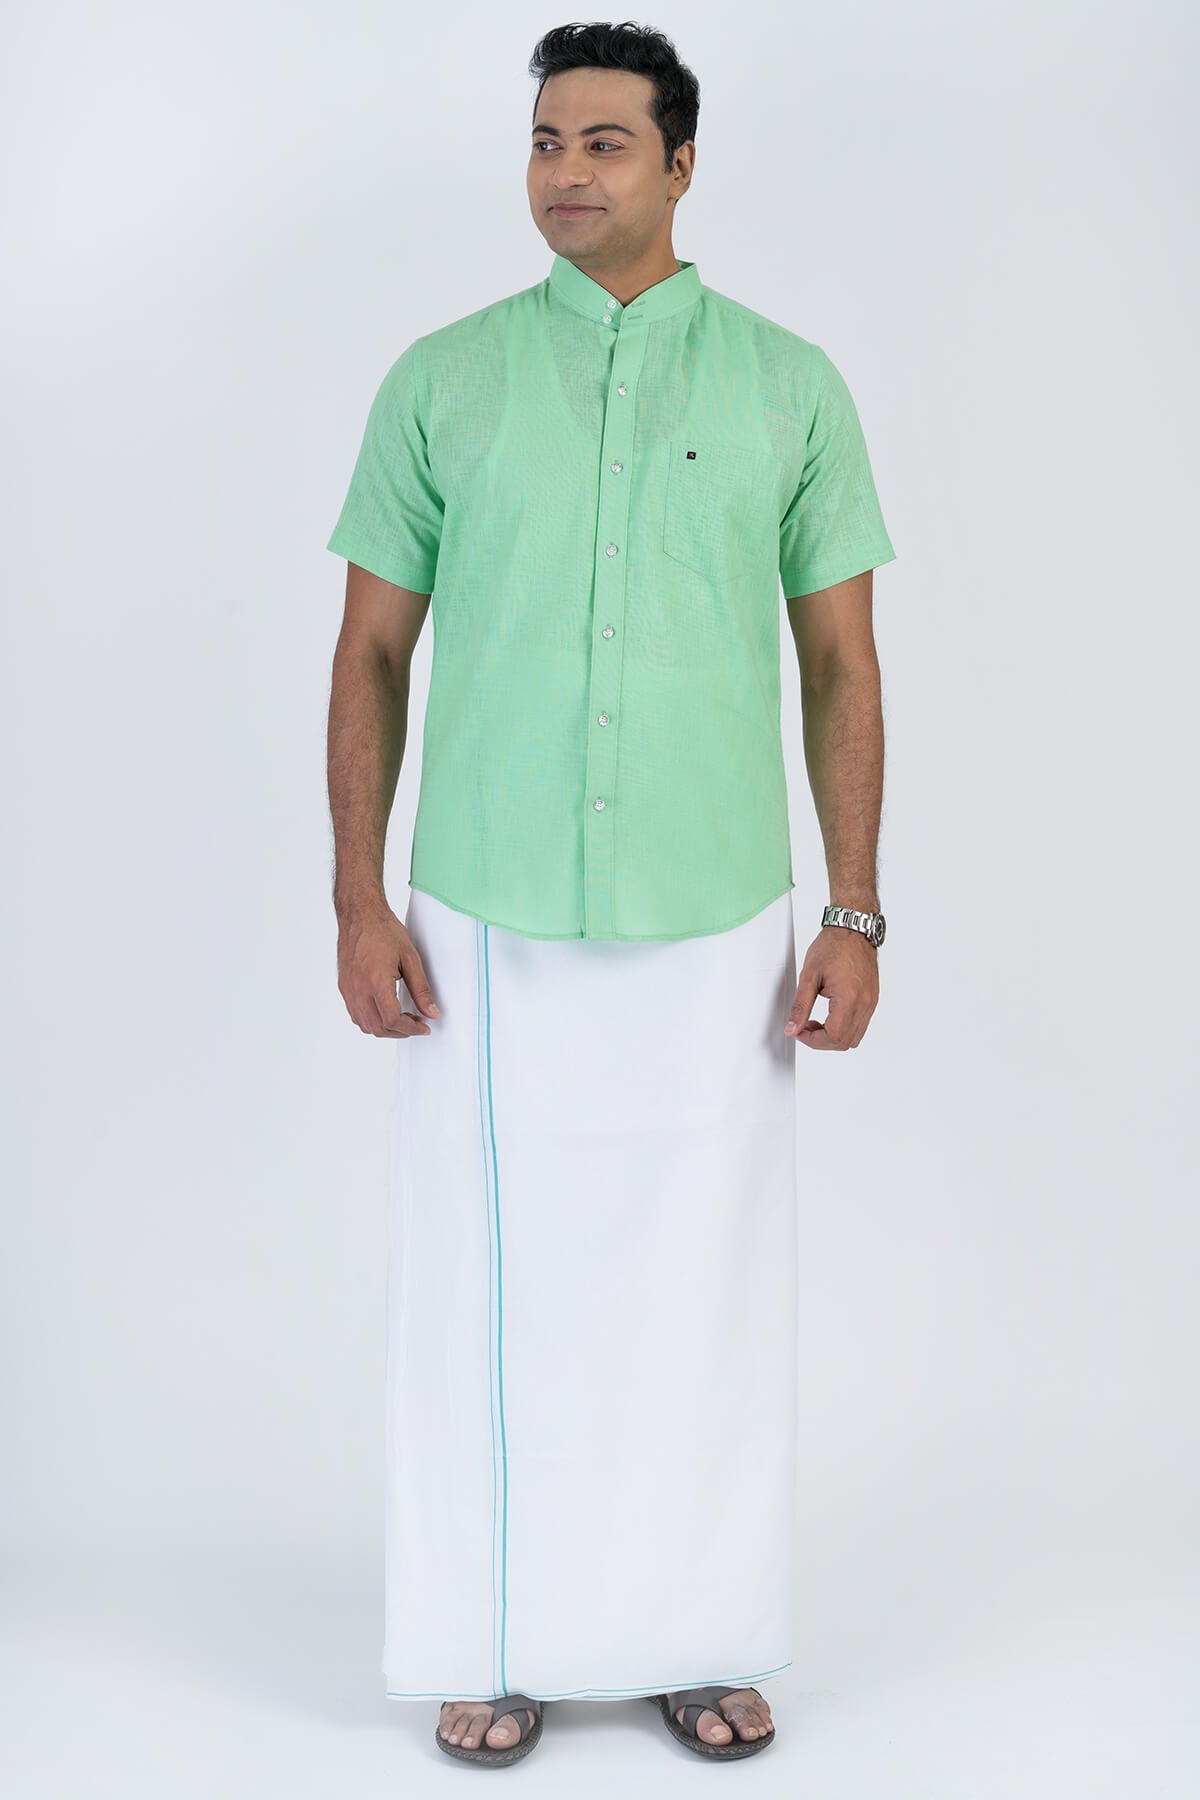 Combo Men's Premium Cotton Dhoti with Green Shirt